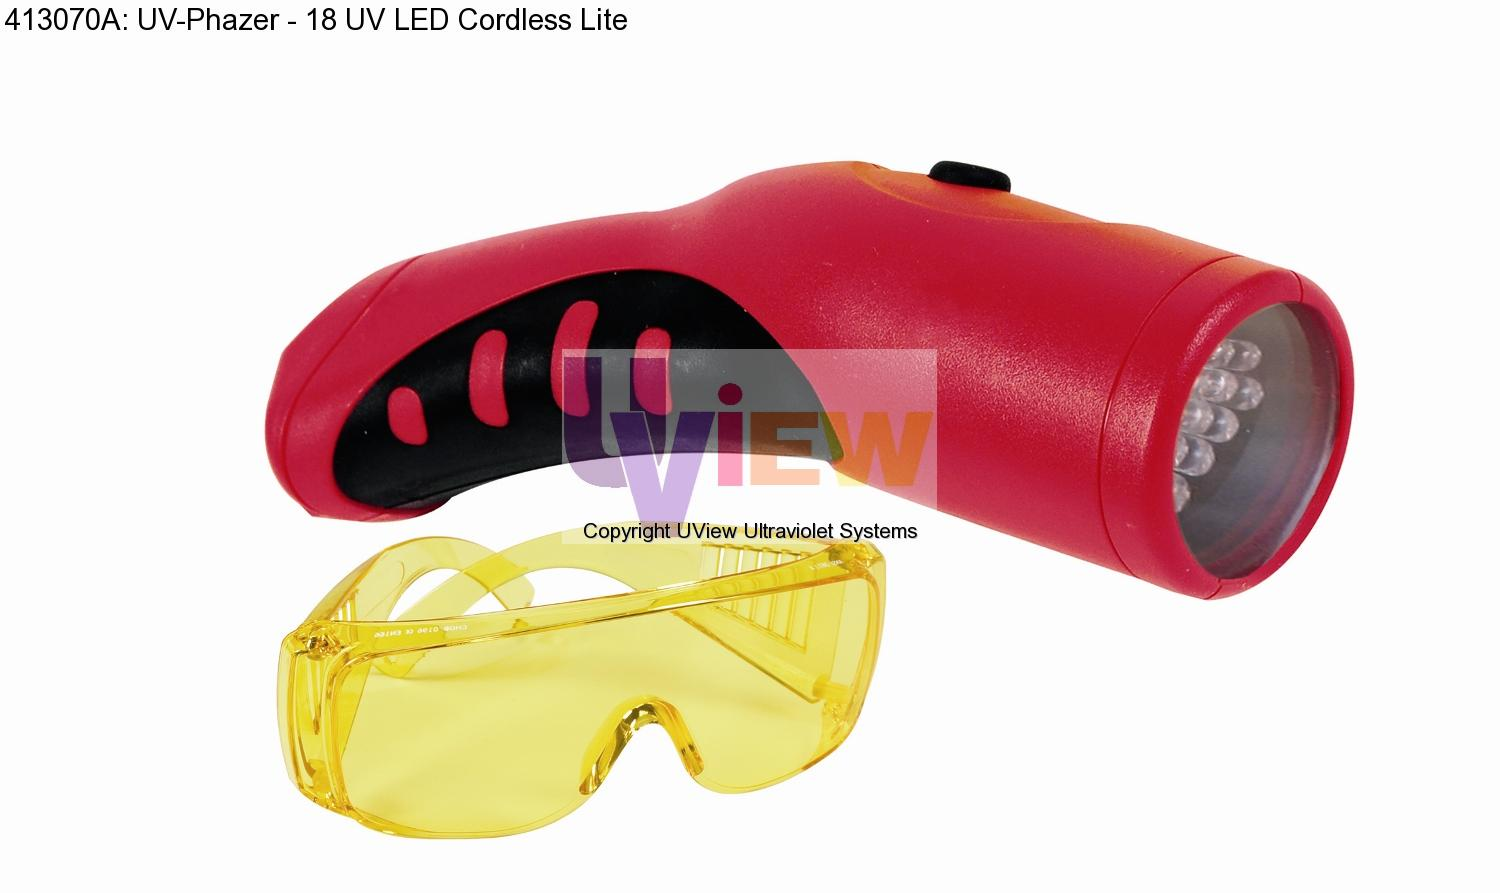 UV-Phazer - 18 UV LED Cordless Lite